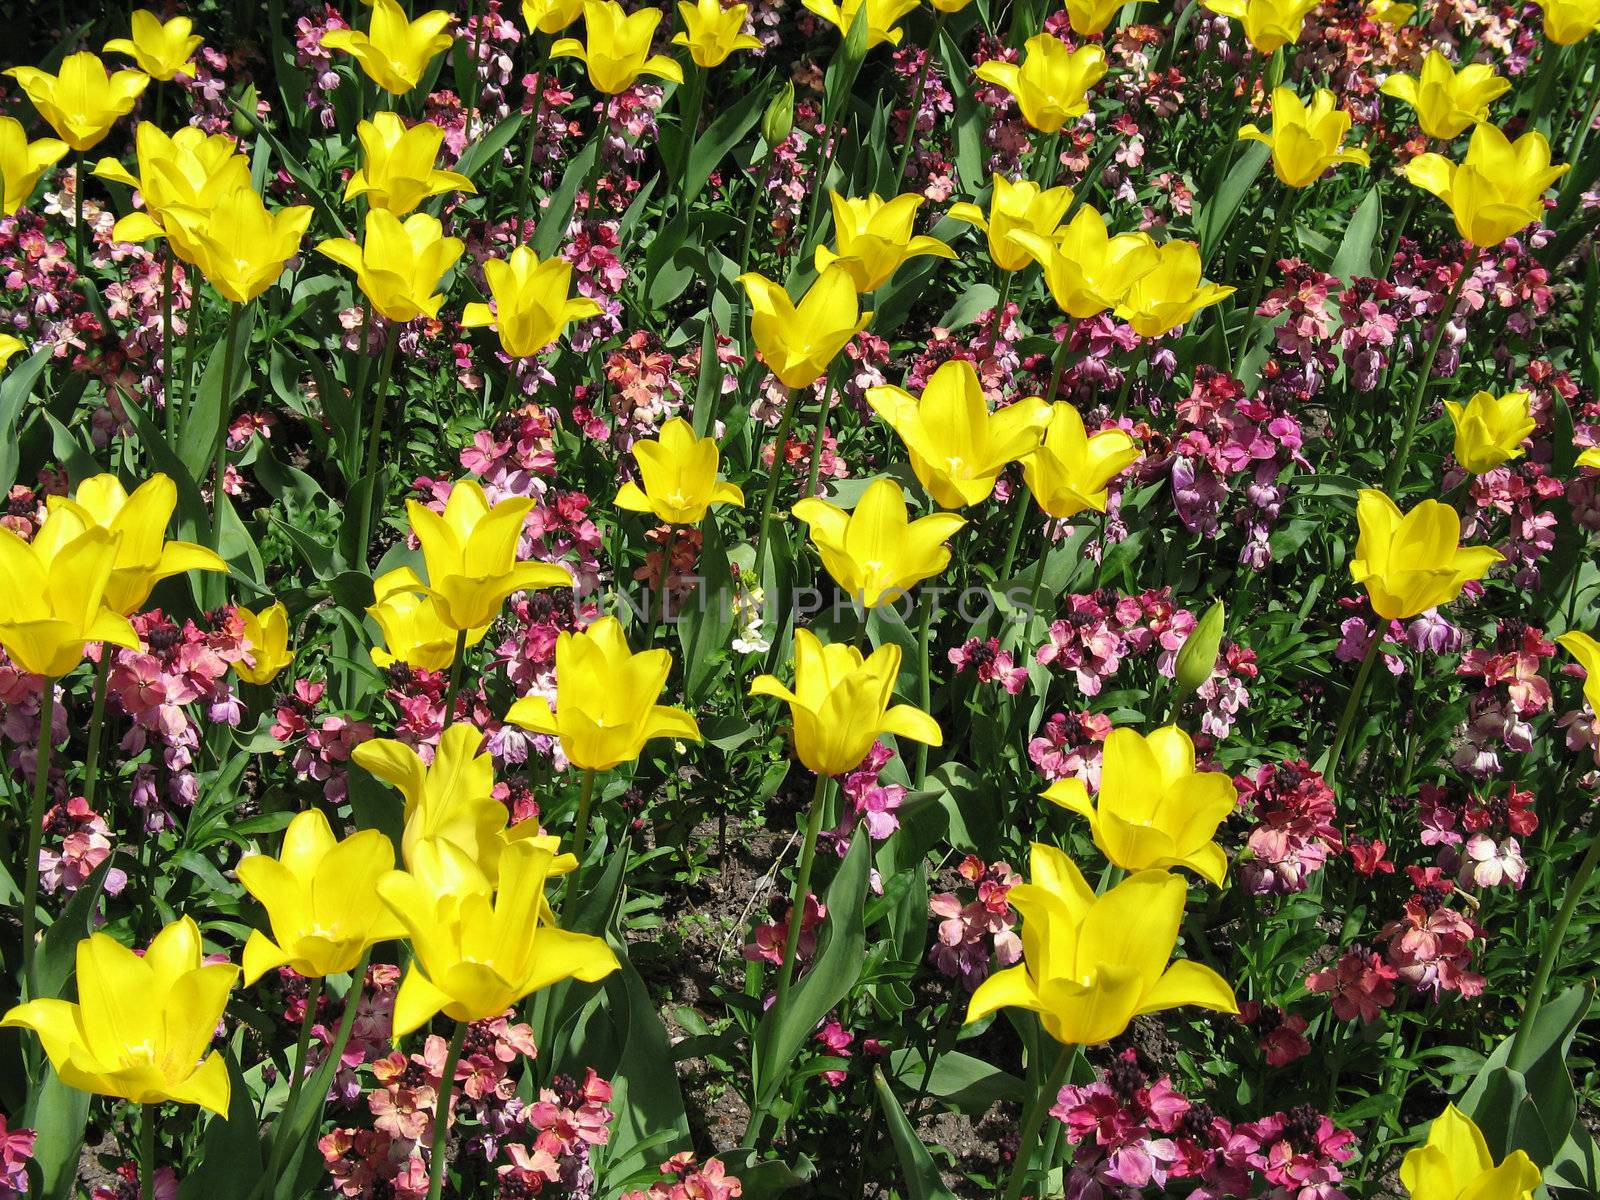 yellow tulip field by mmm